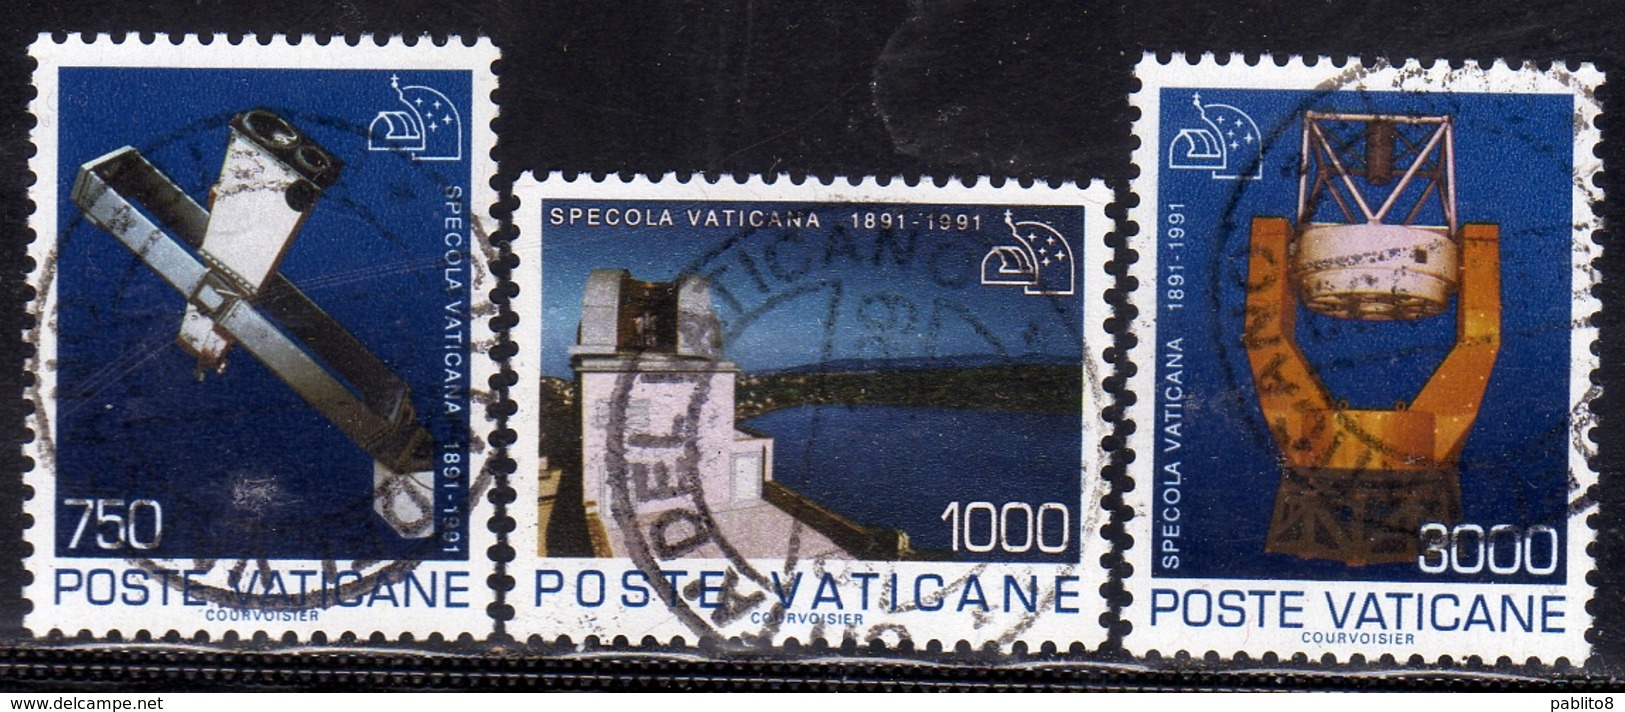 CITTÀ DEL VATICANO VATIKAN VATICAN 1991 SPECOLA VATICANA SERIE COMPLETA COMPLETE SET USATA USED OBLITERE' - Used Stamps